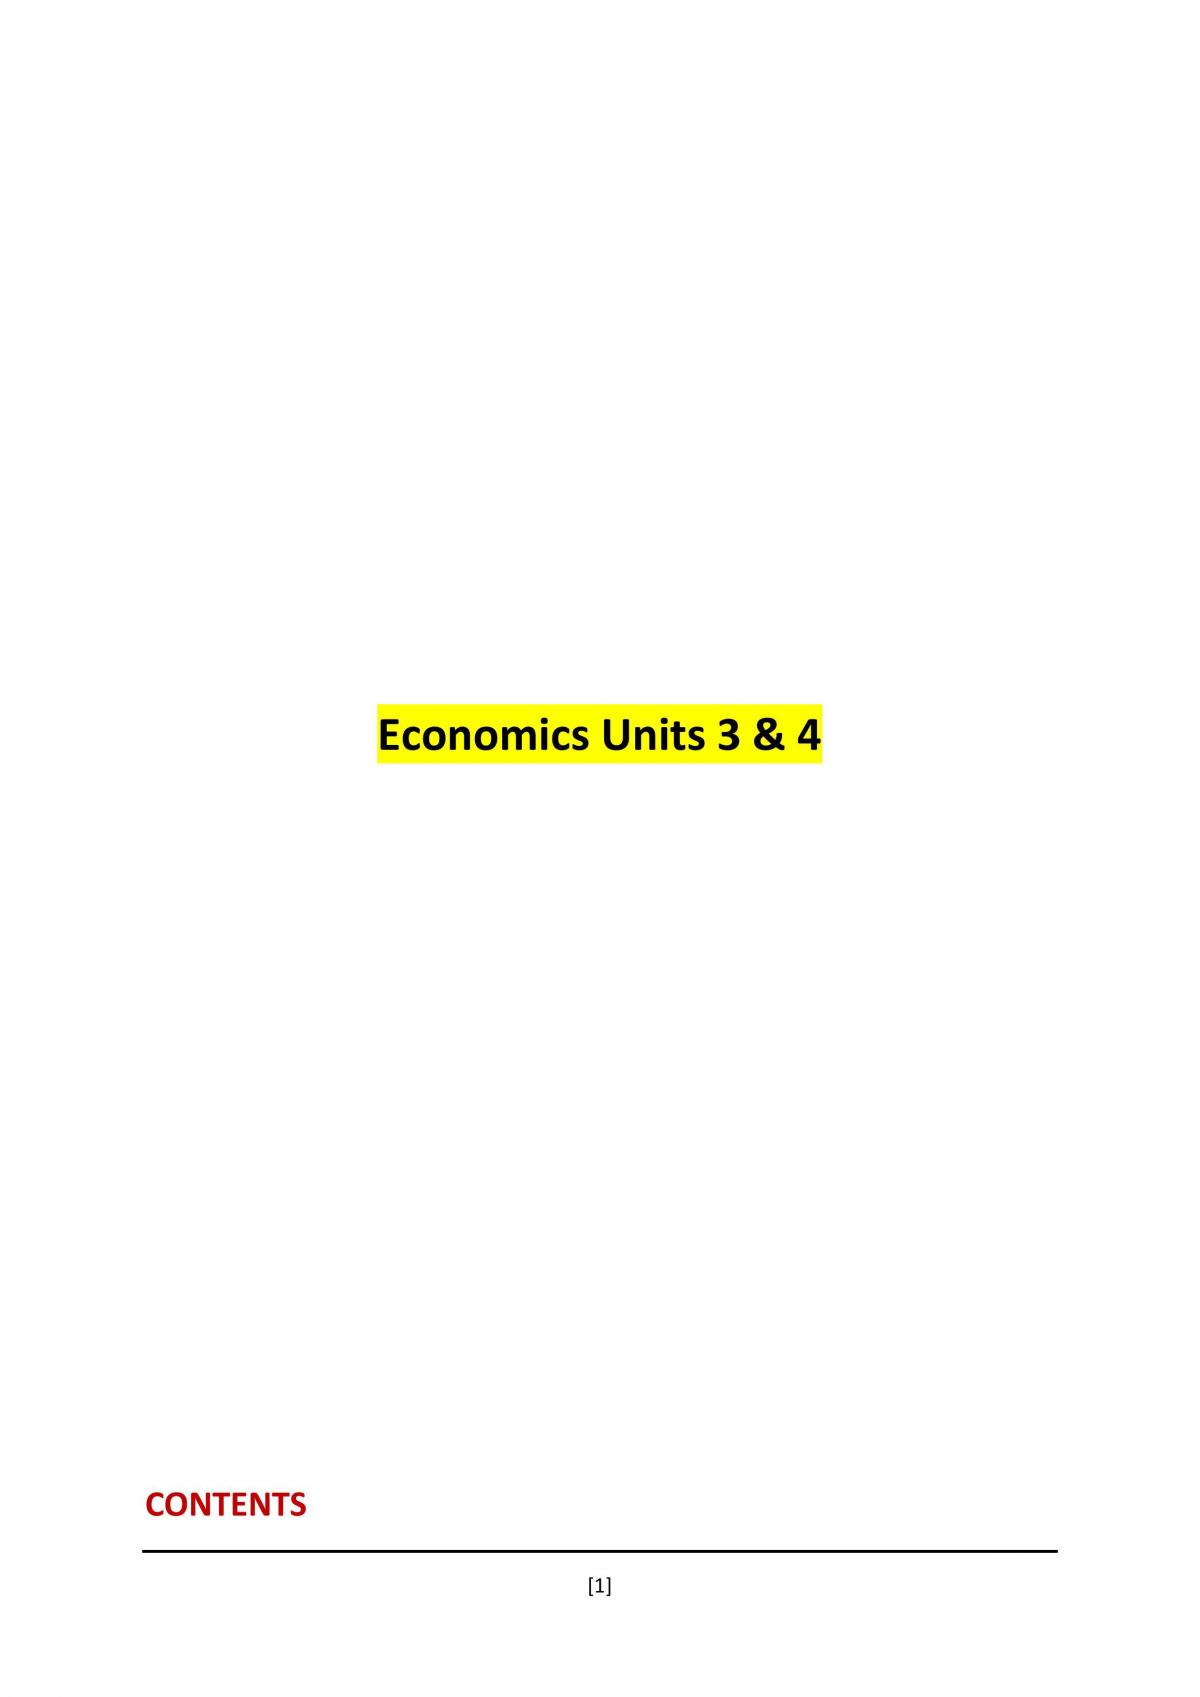 Complete Economics 2020 Study Notes - Page 1